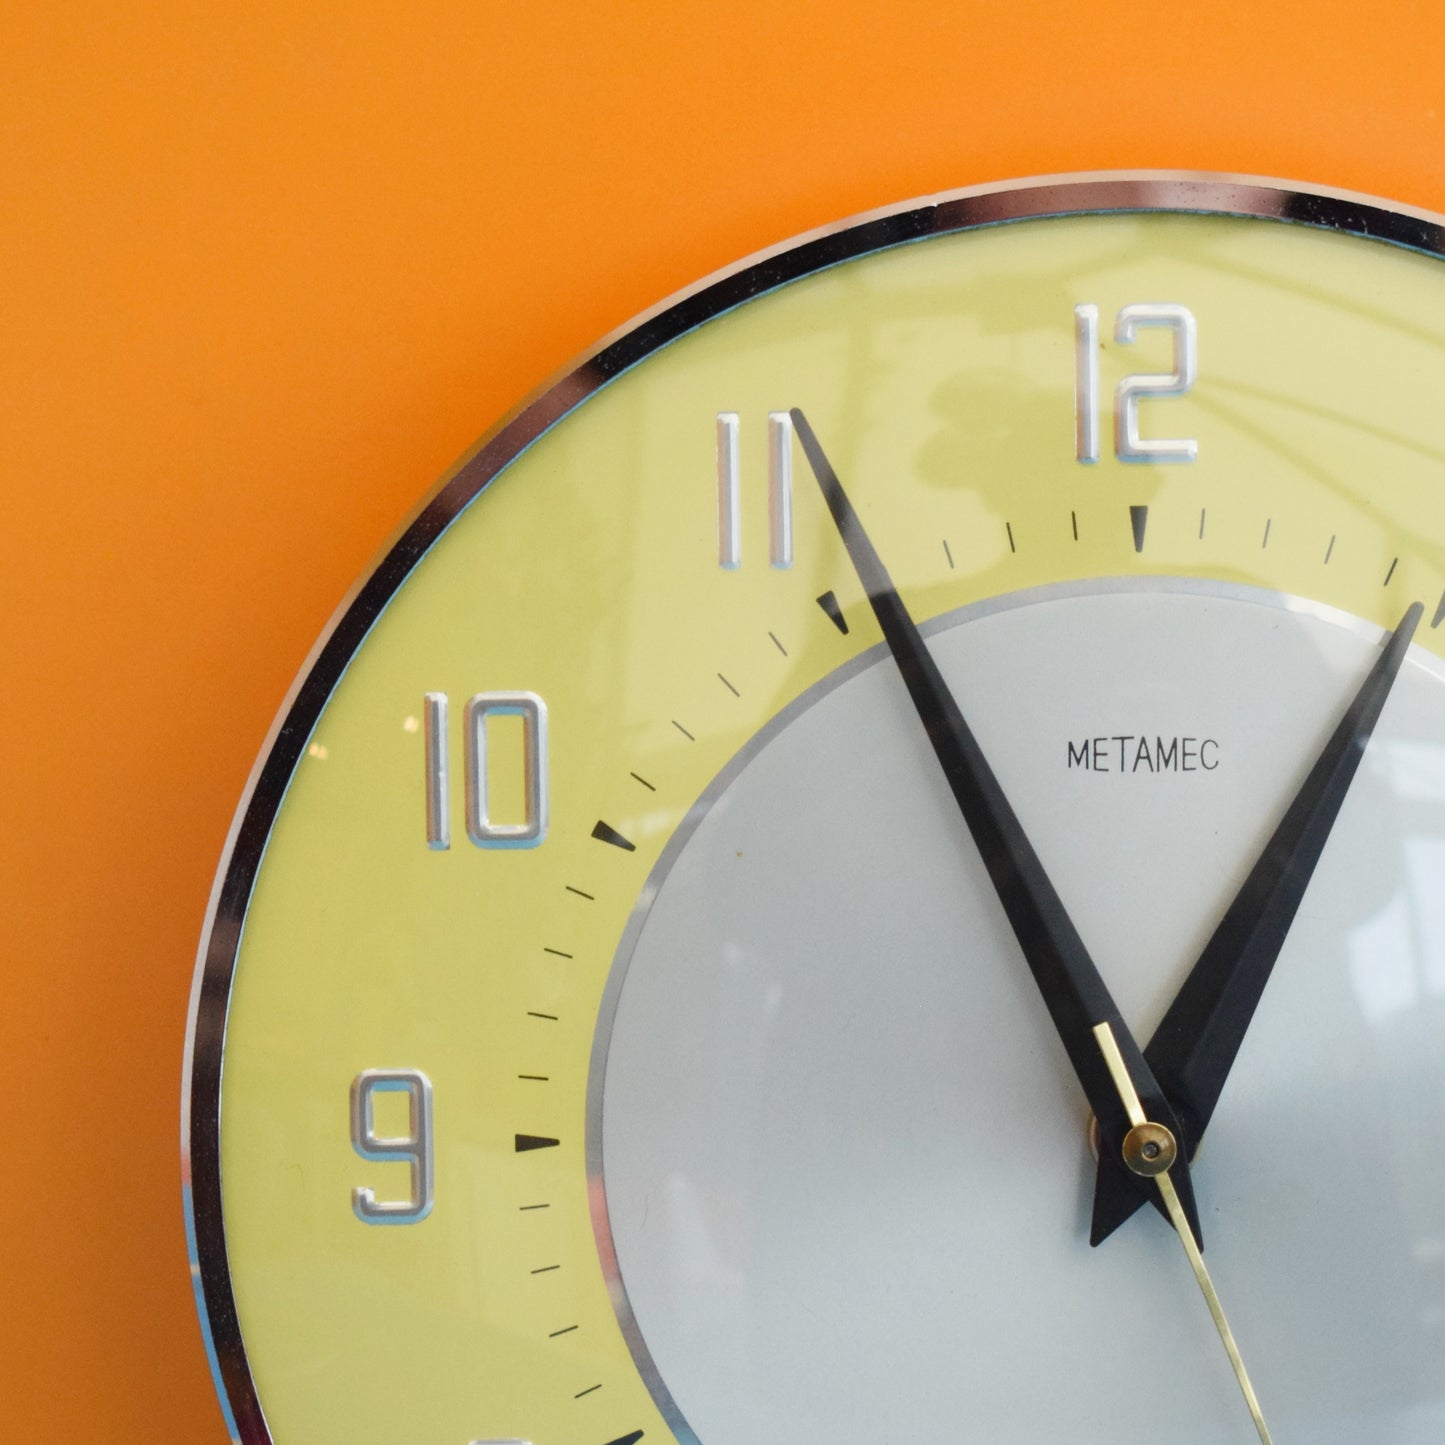 Vintage 1960s Metamec Electric Clock - Yellow